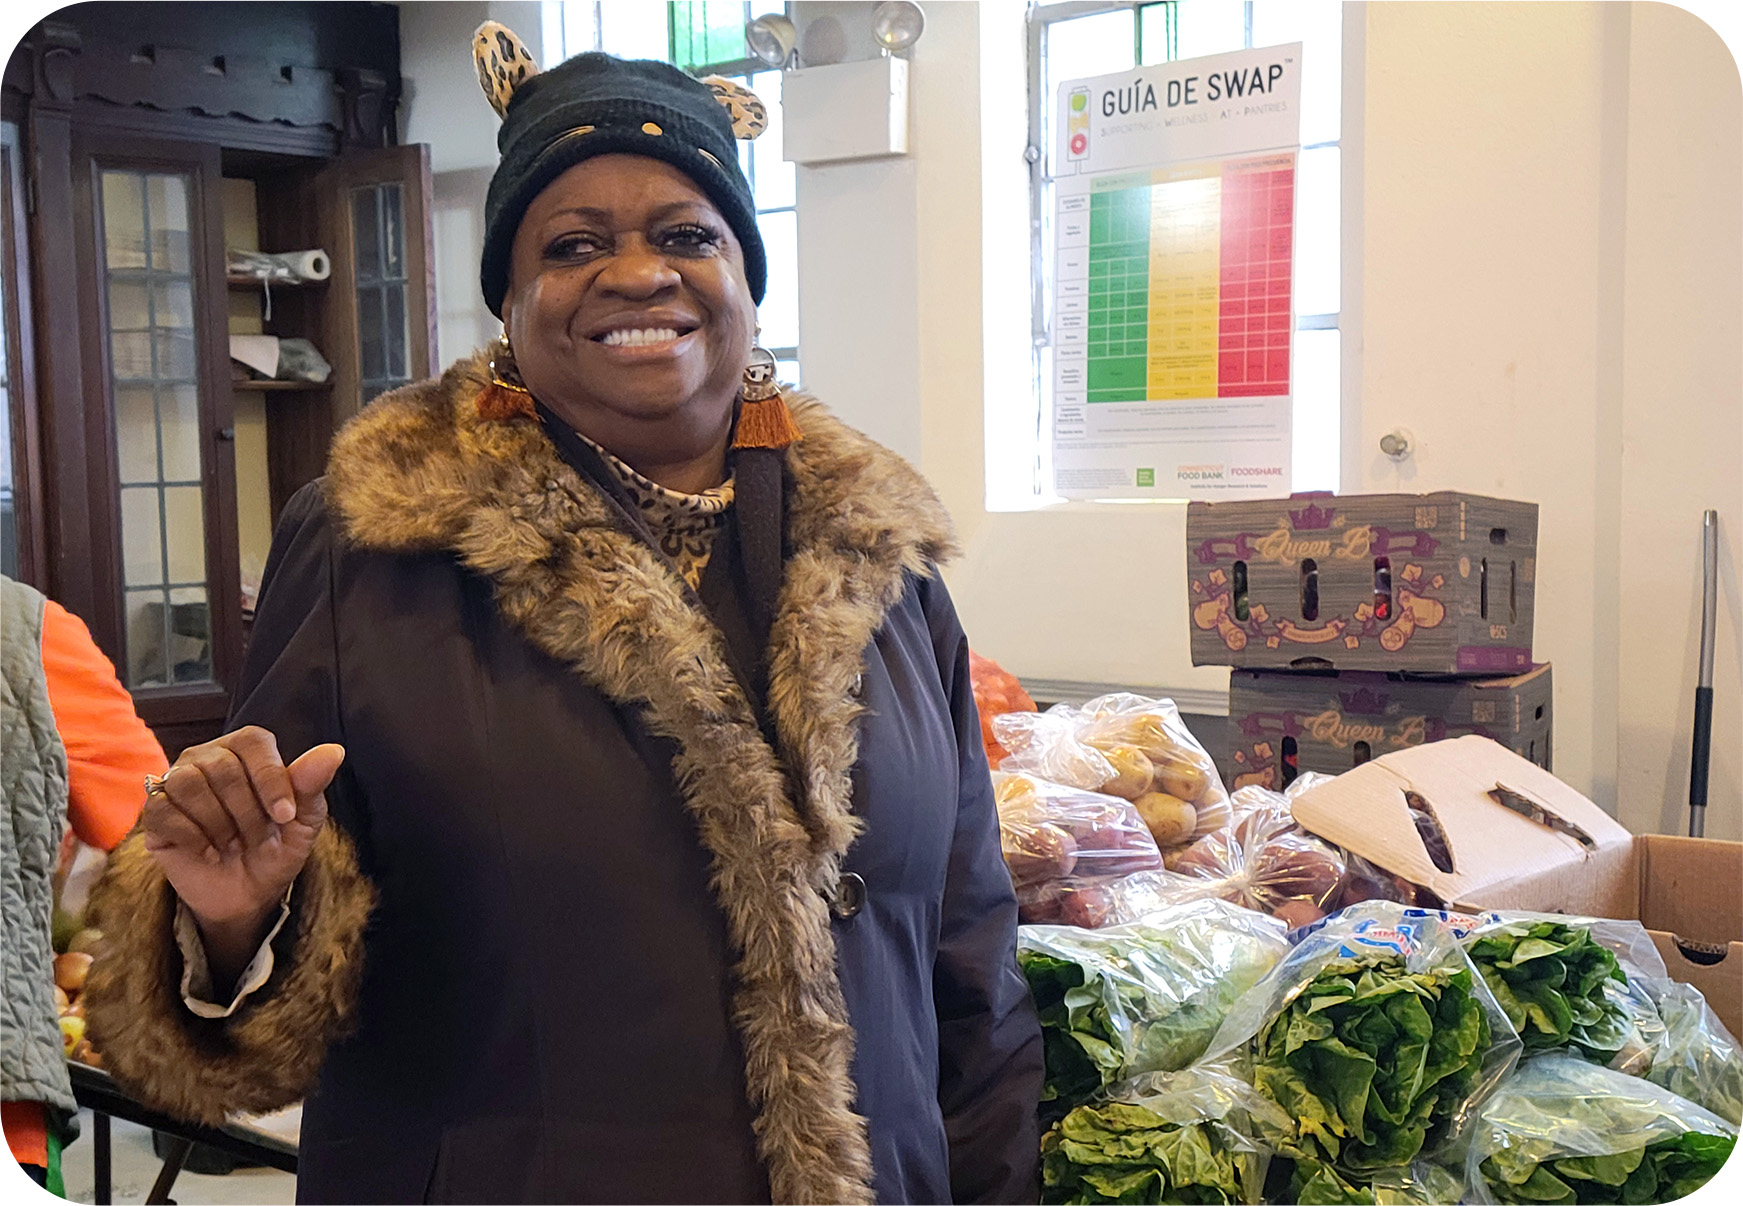 Carolyn, a former preschool teacher, who frequents the Free Food Market.